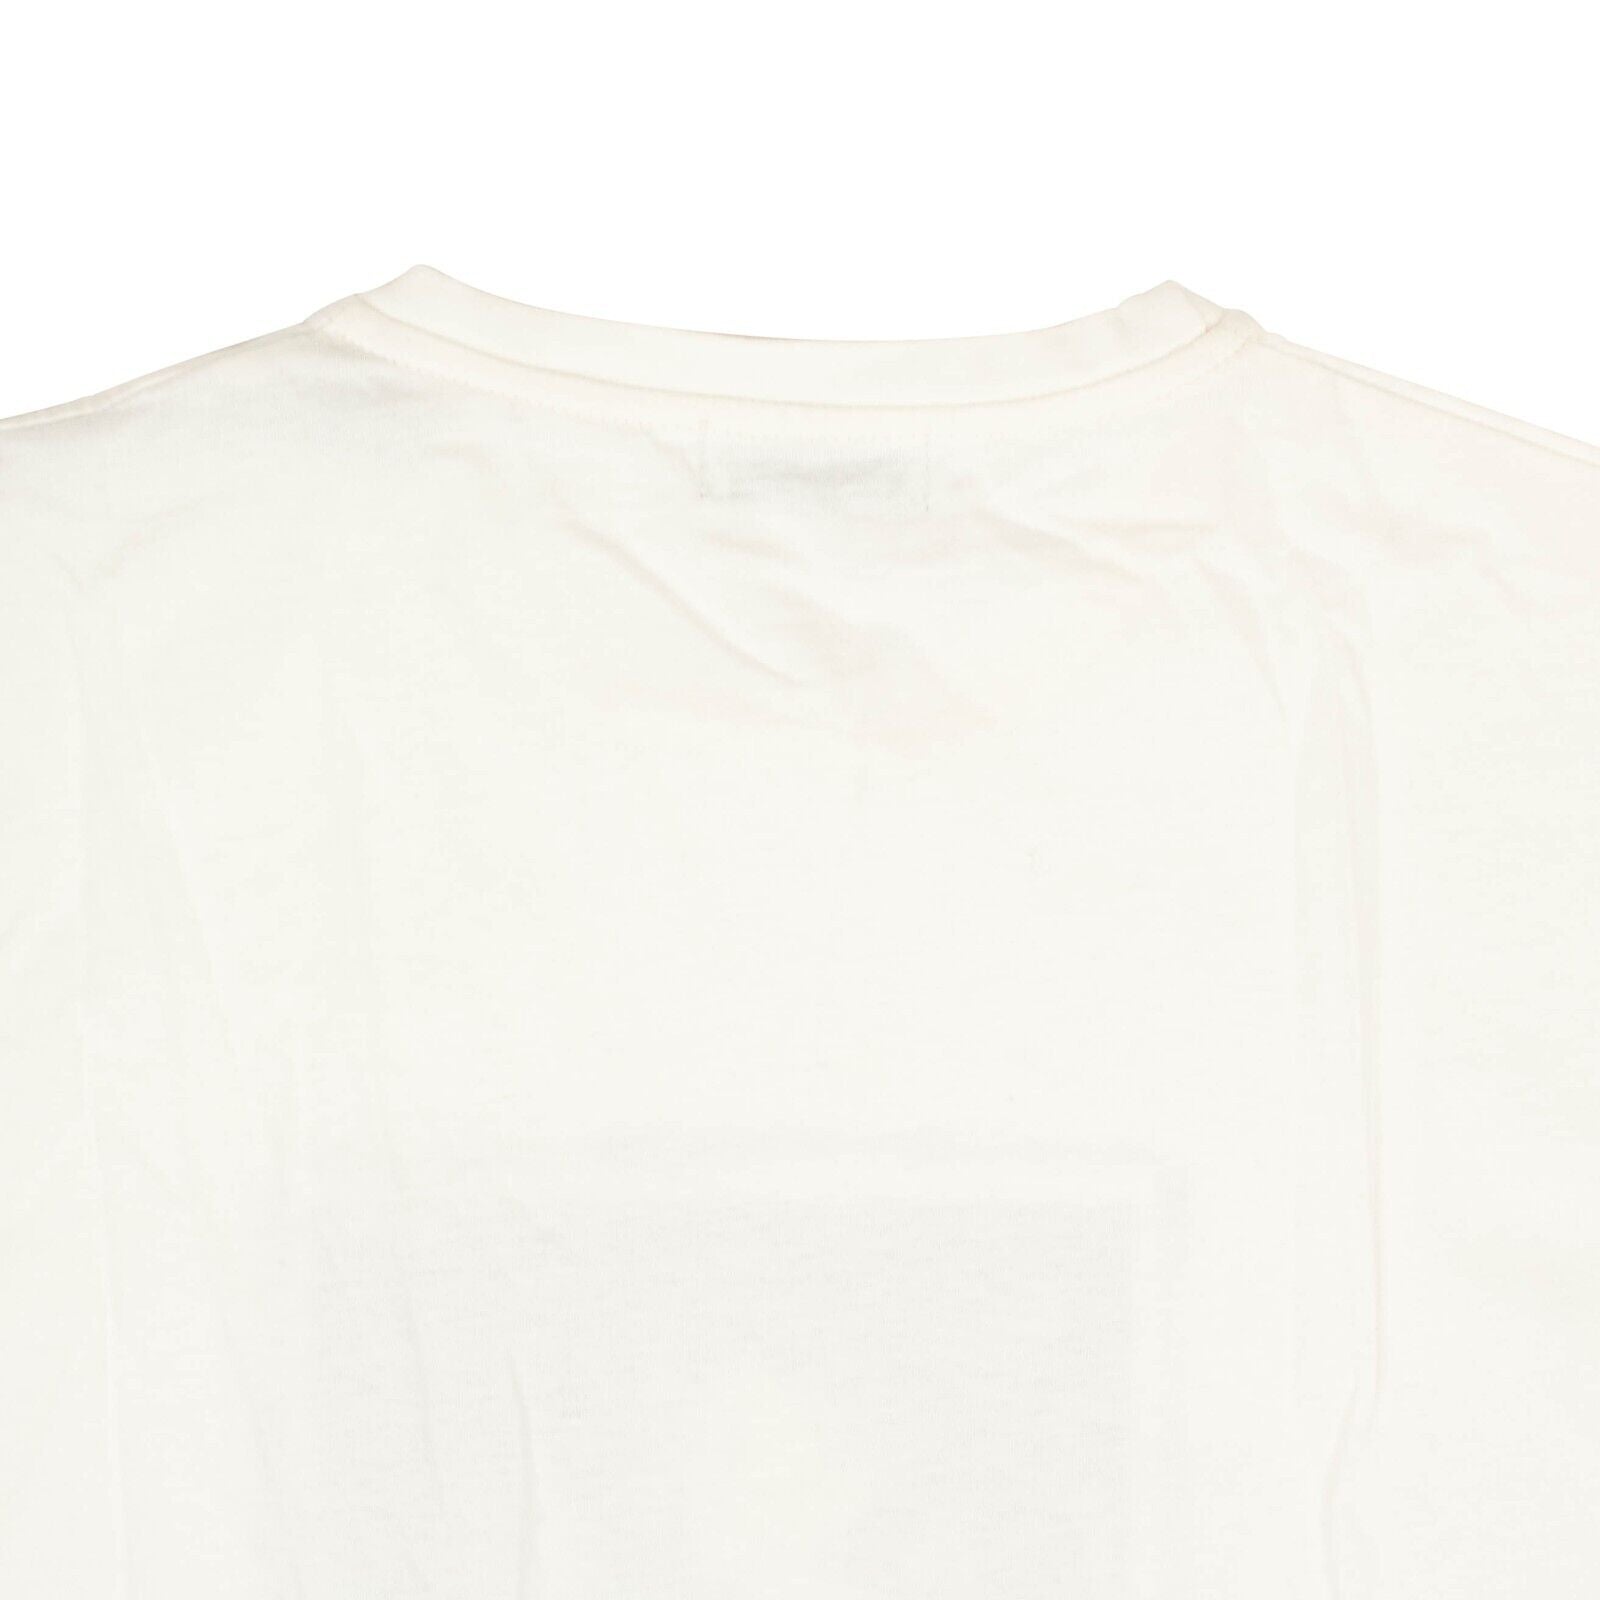 President'S T-Shirt Ss Jersey Art Hand Print - White